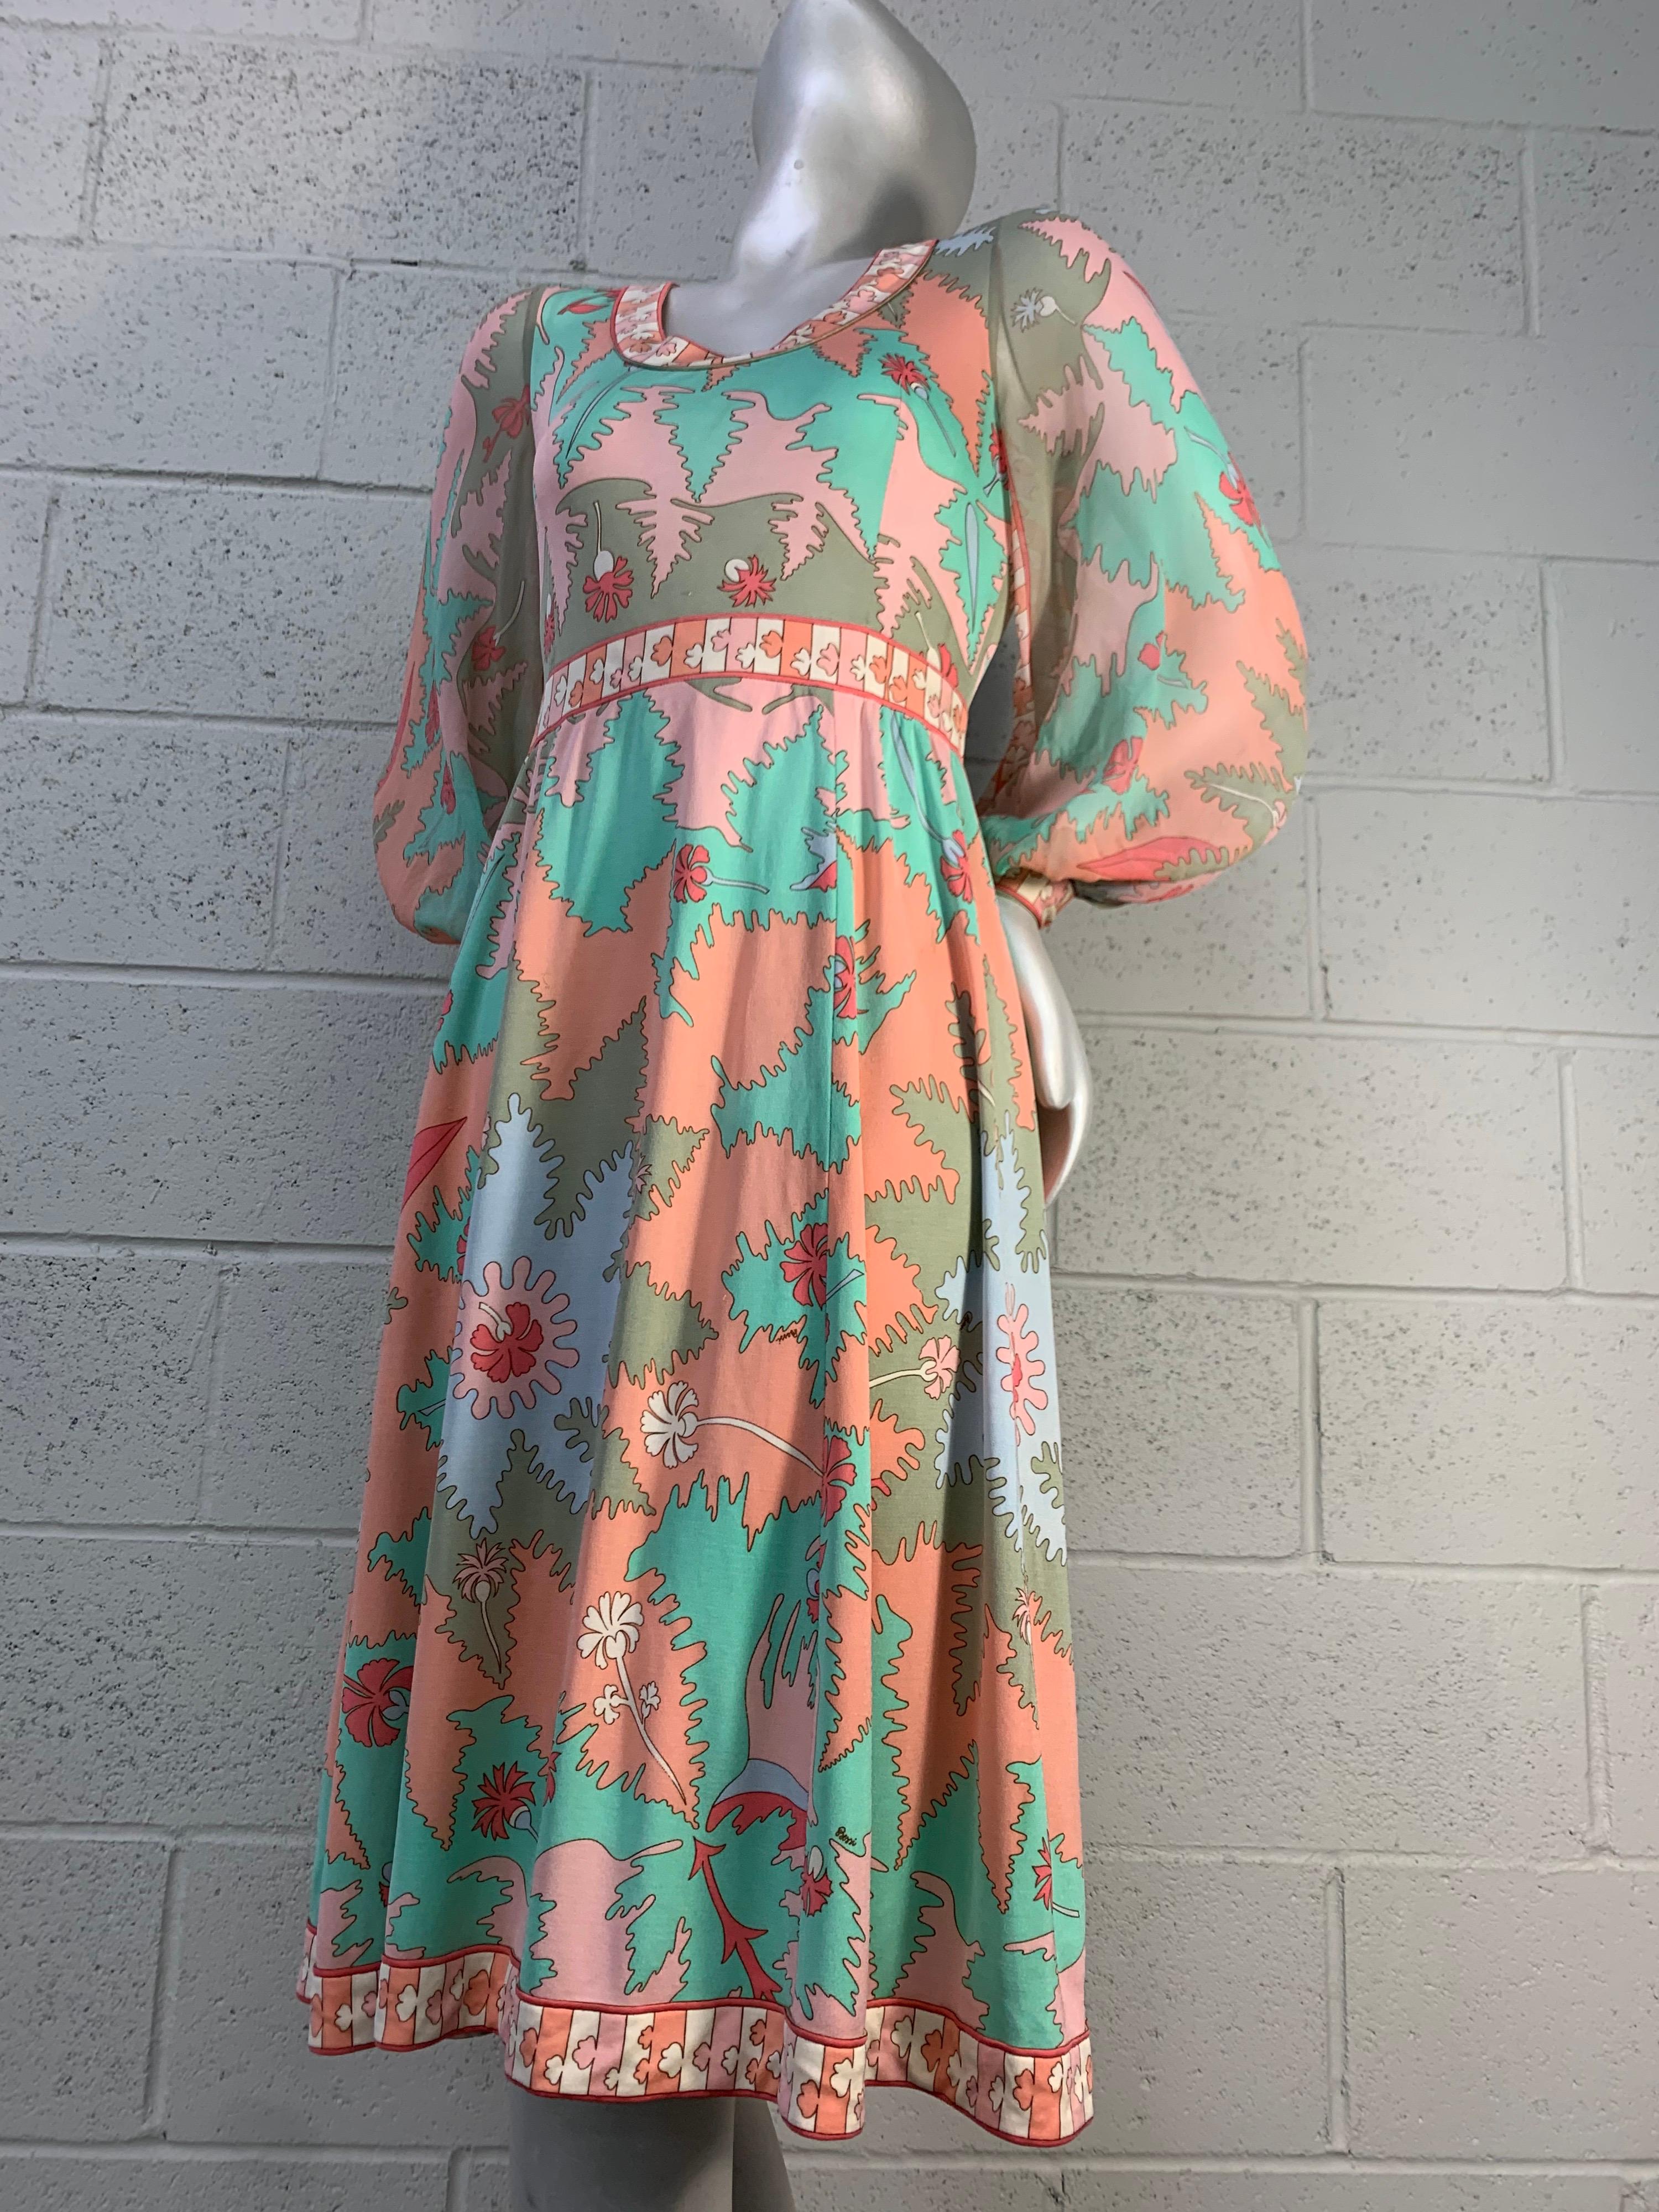 Women's 1970s Bessi Silk Jersey and Chiffon Psychedelic Dress in Peach Aqua & Persimmon 